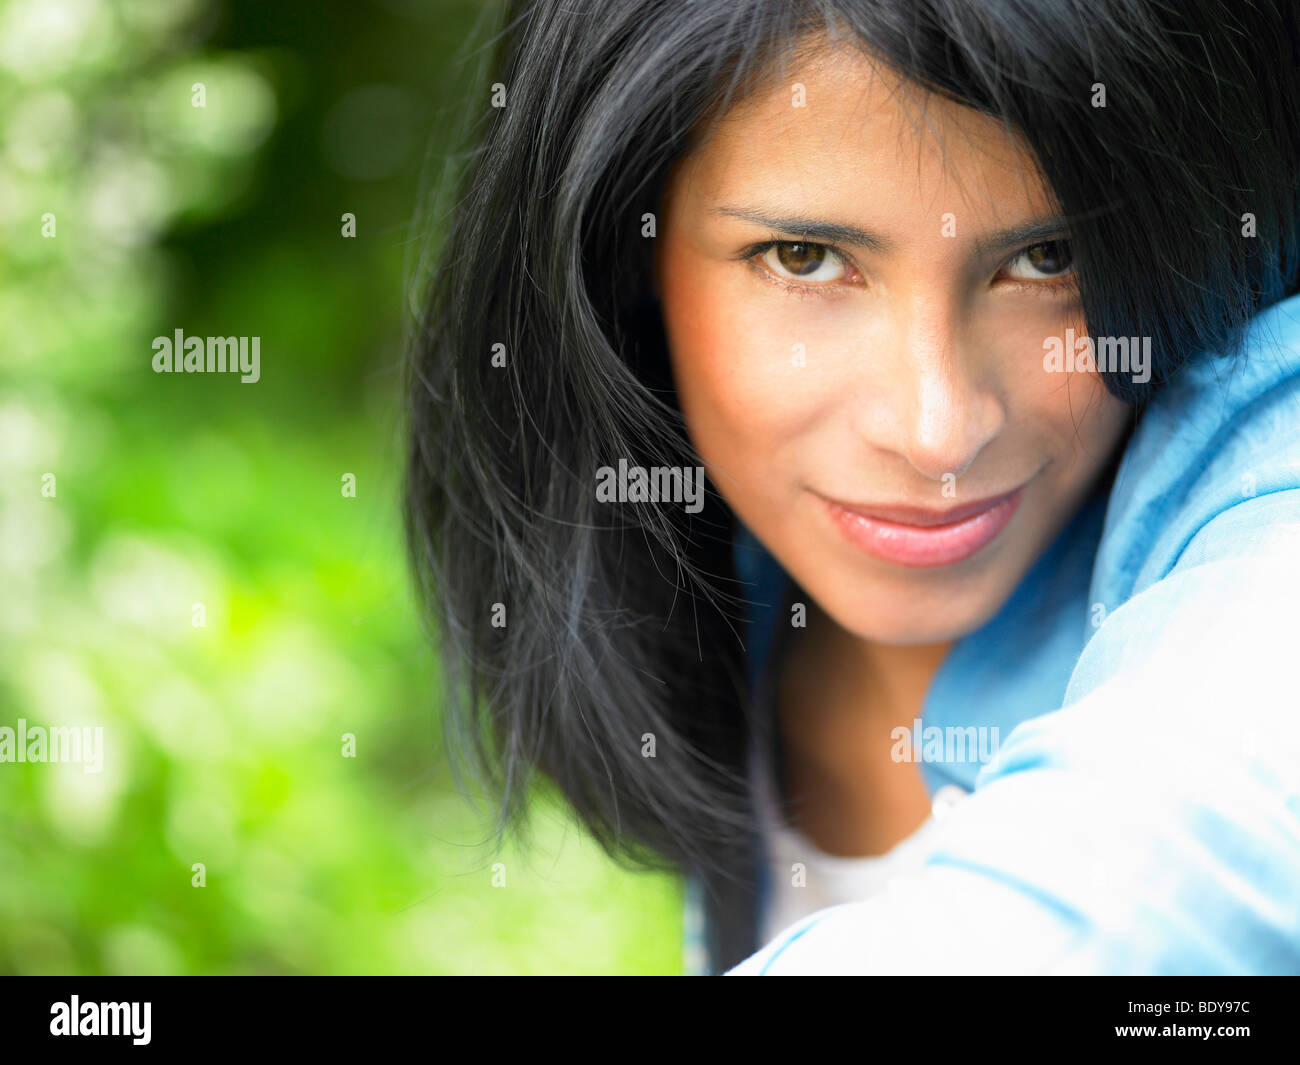 Woman looking at camera, outdoors Stock Photo